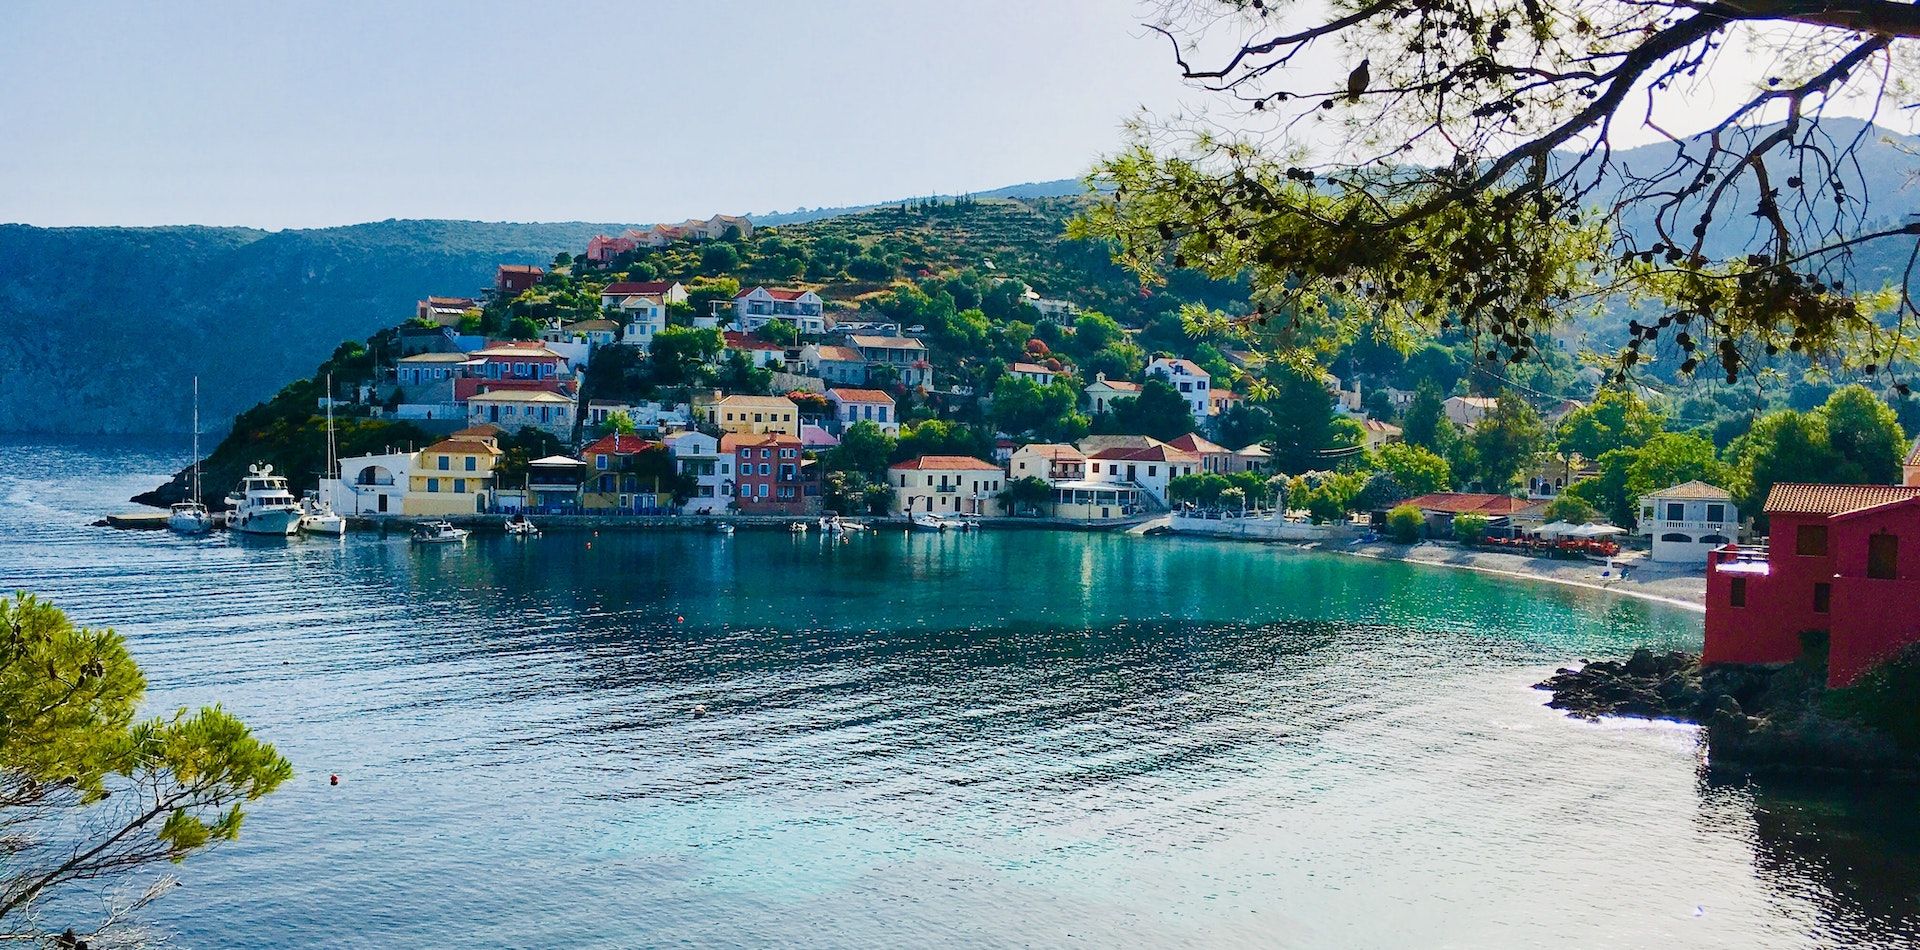 Greek Islands Dominate Most Beautiful Mediterranean Islands 2023 List